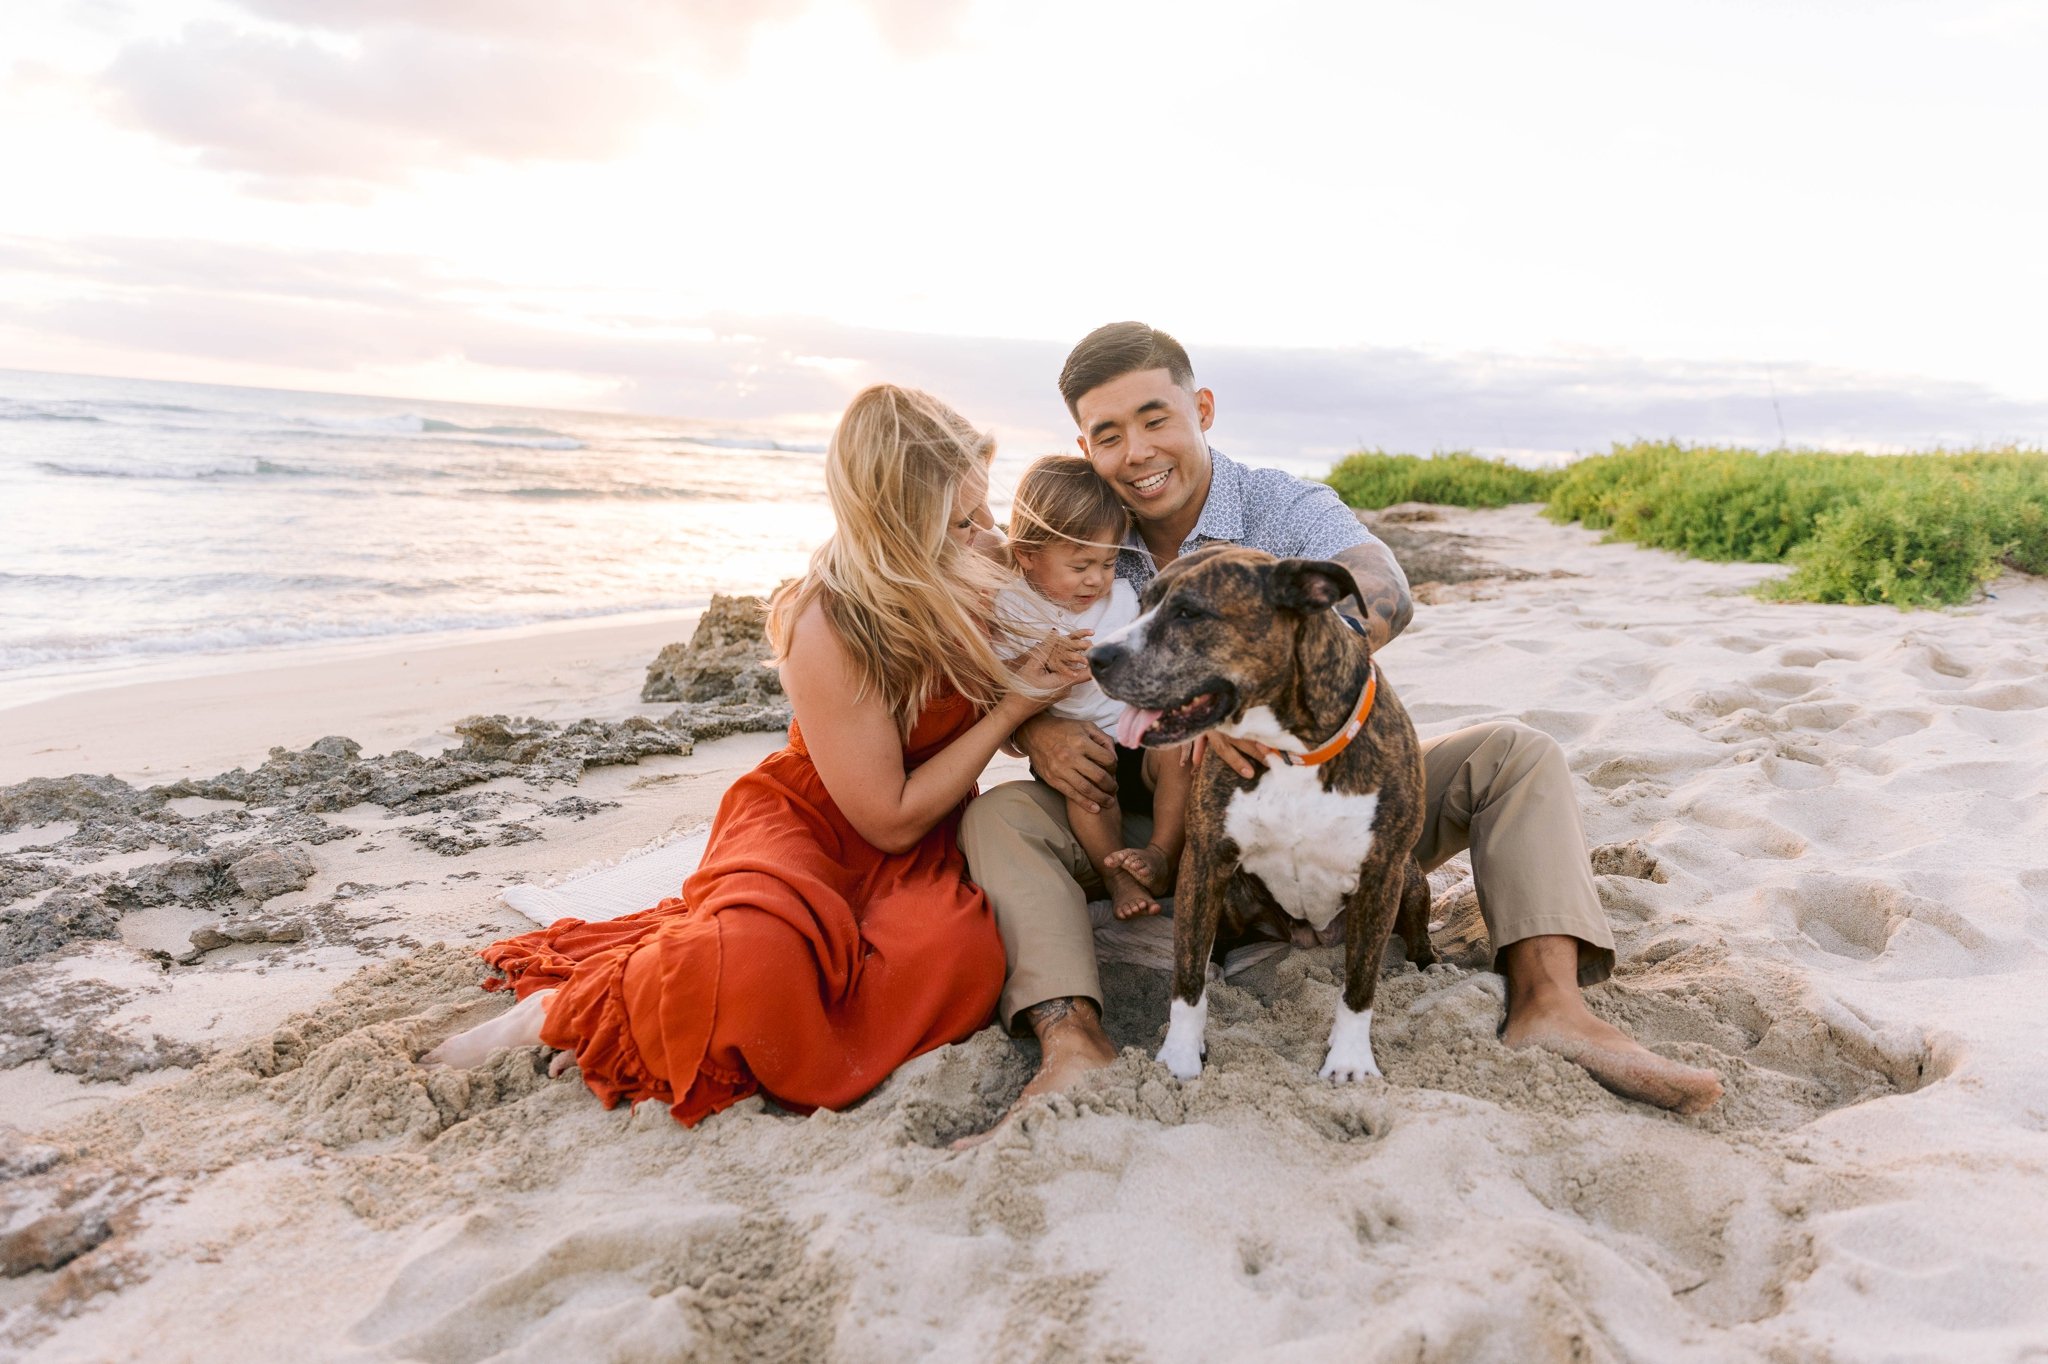 Sunset Family Photographer in Oahu Hawaii - Barbers Point Beach Park 